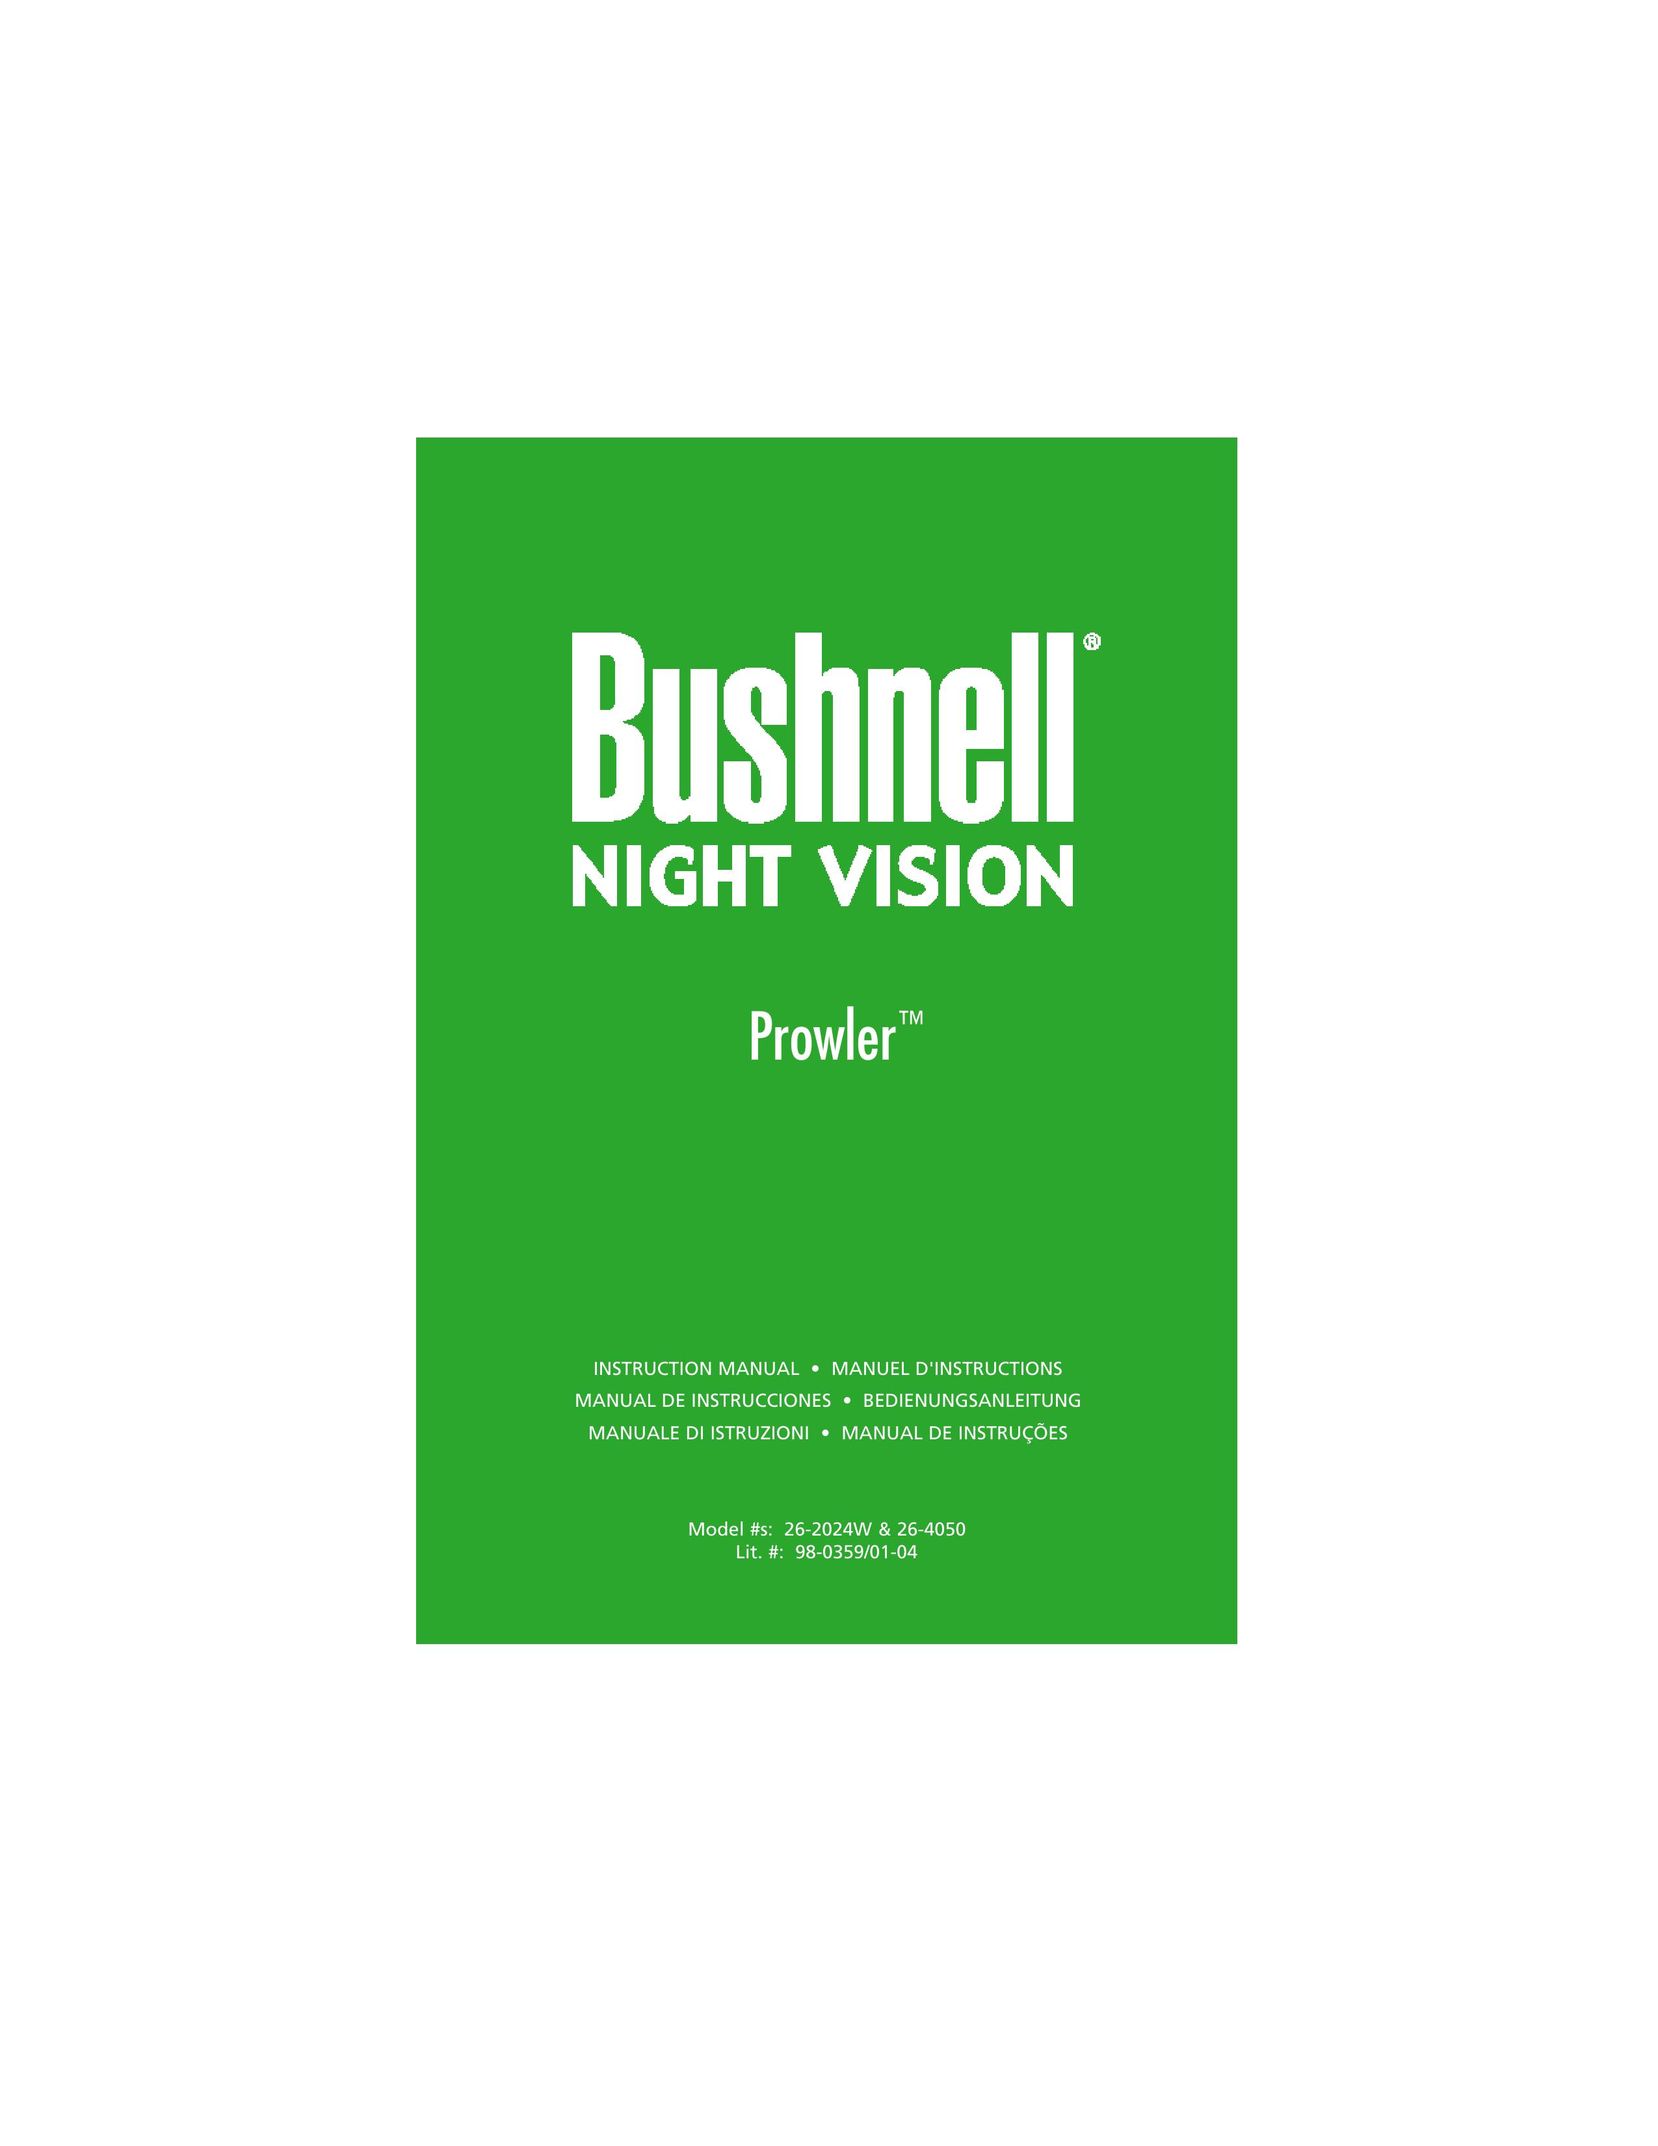 Bushnell 26-2024W Appliance Trim Kit User Manual